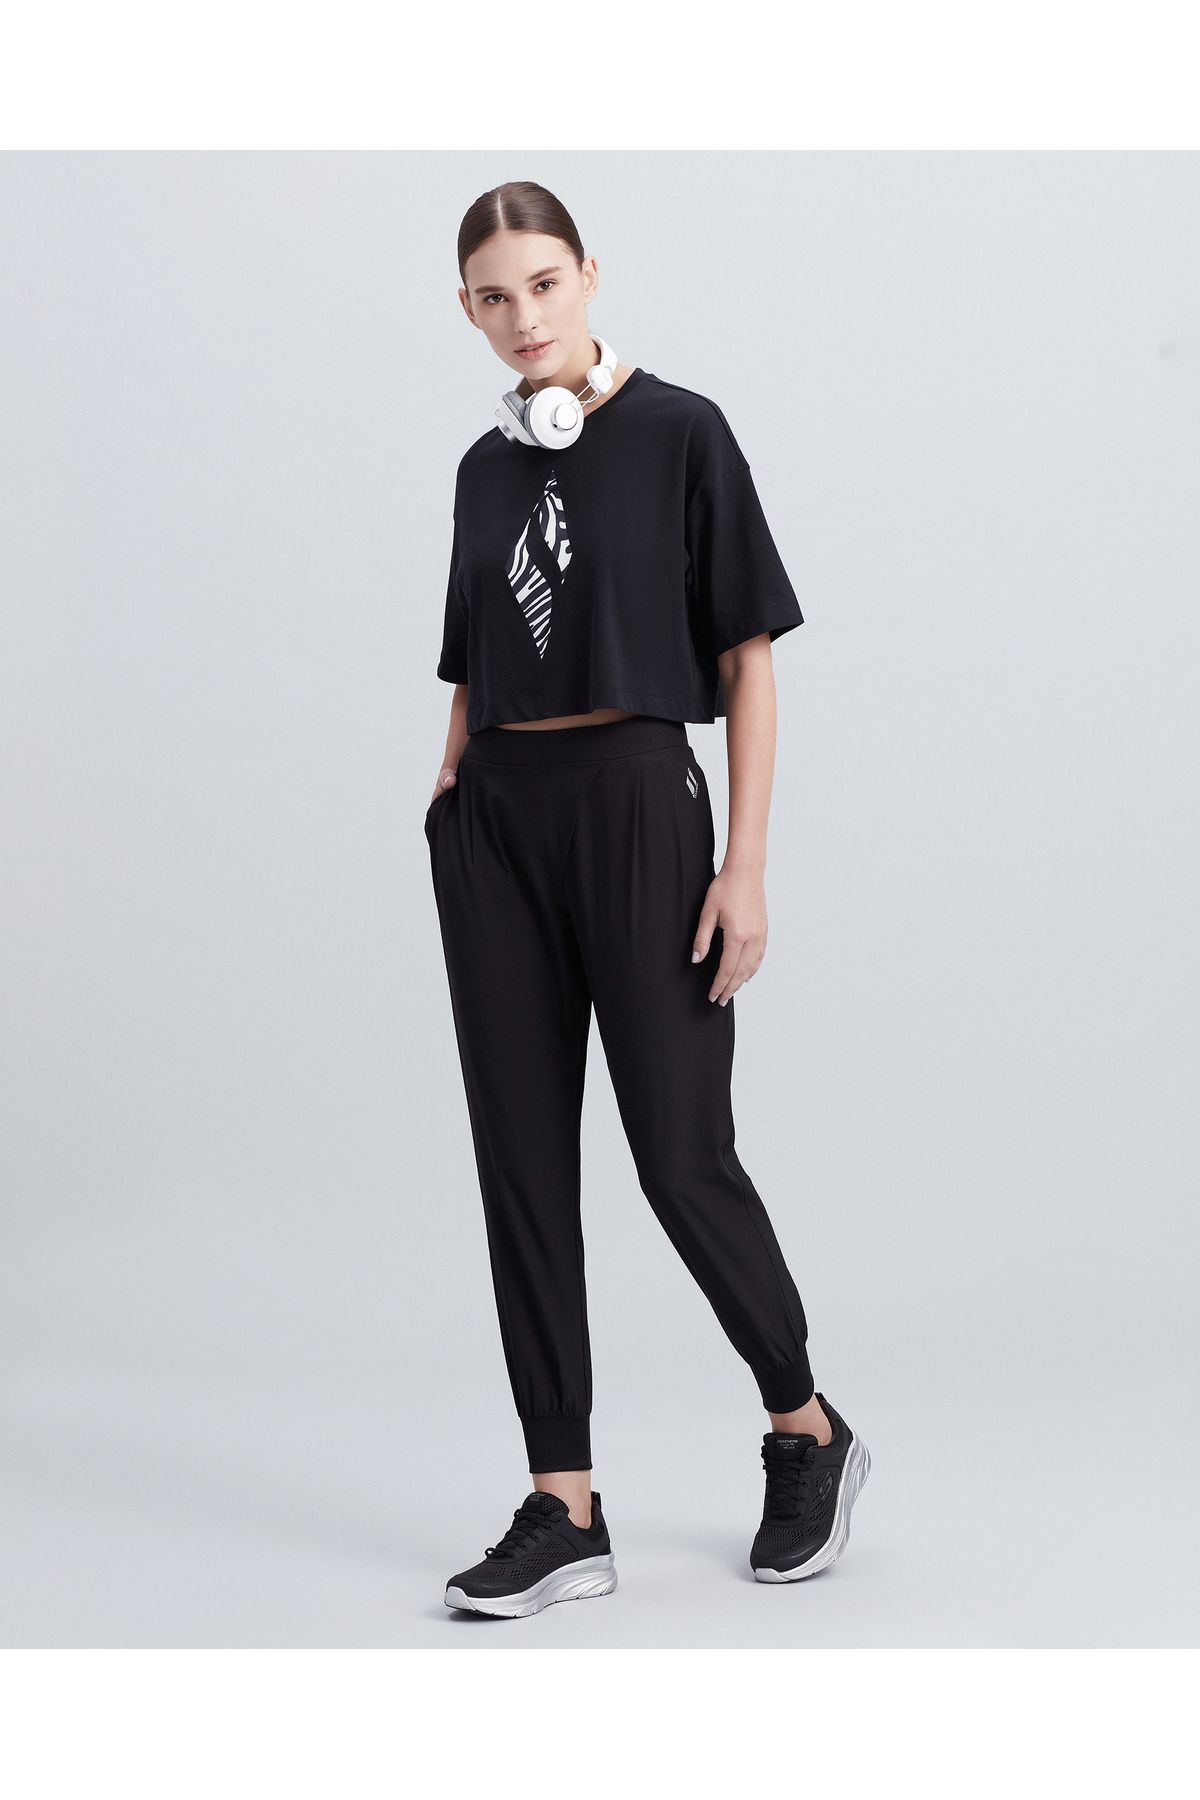 Skechers W Diamond T-shirt Kadın Siyah Tshirt S212926-001